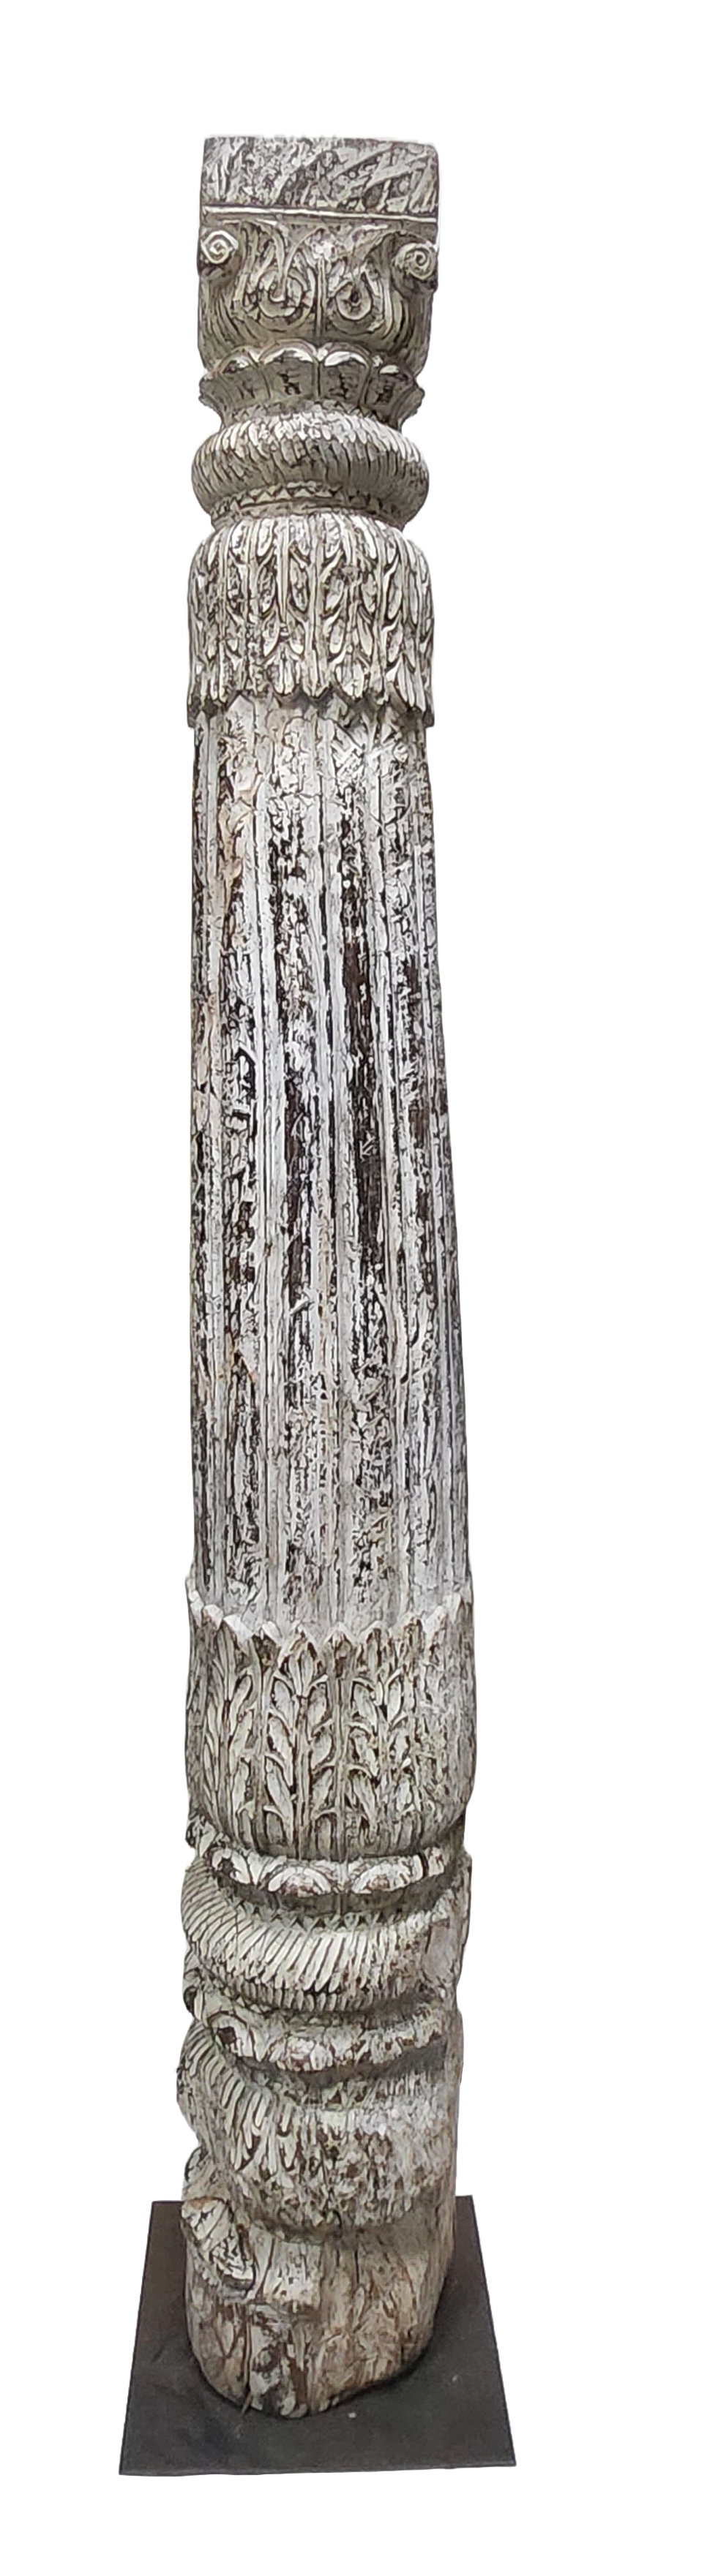 Vintage Pillar Candle Holder / Decor